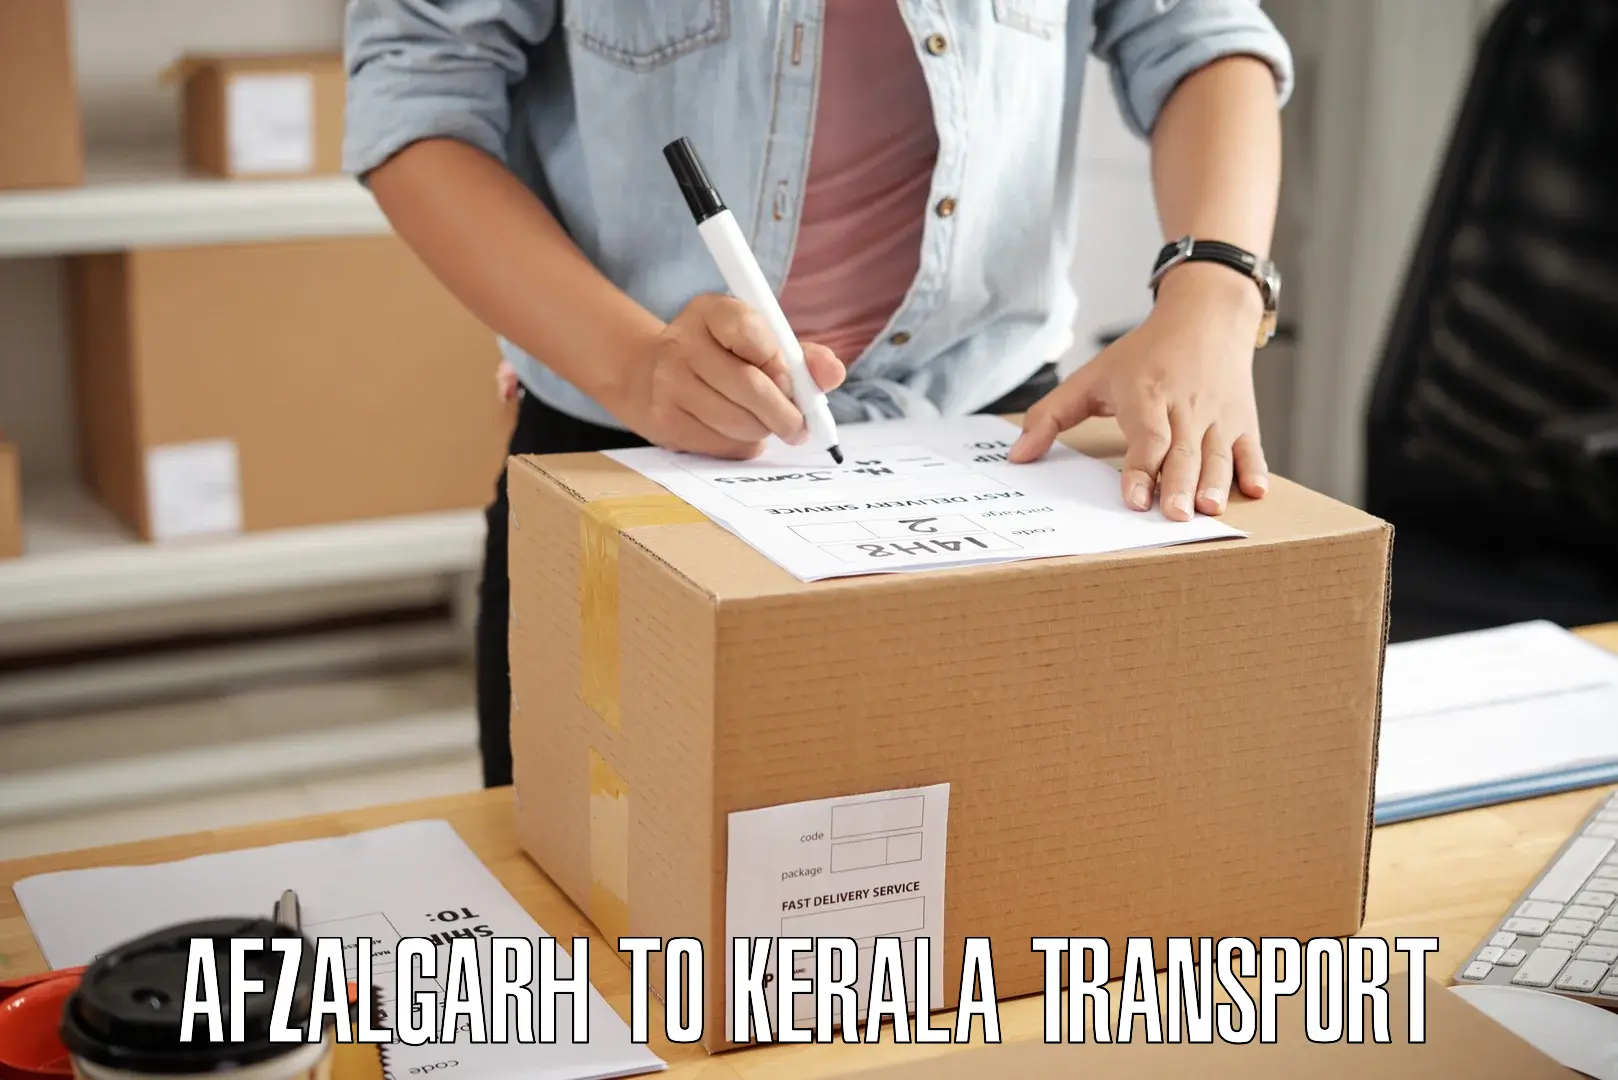 Sending bike to another city Afzalgarh to Kerala